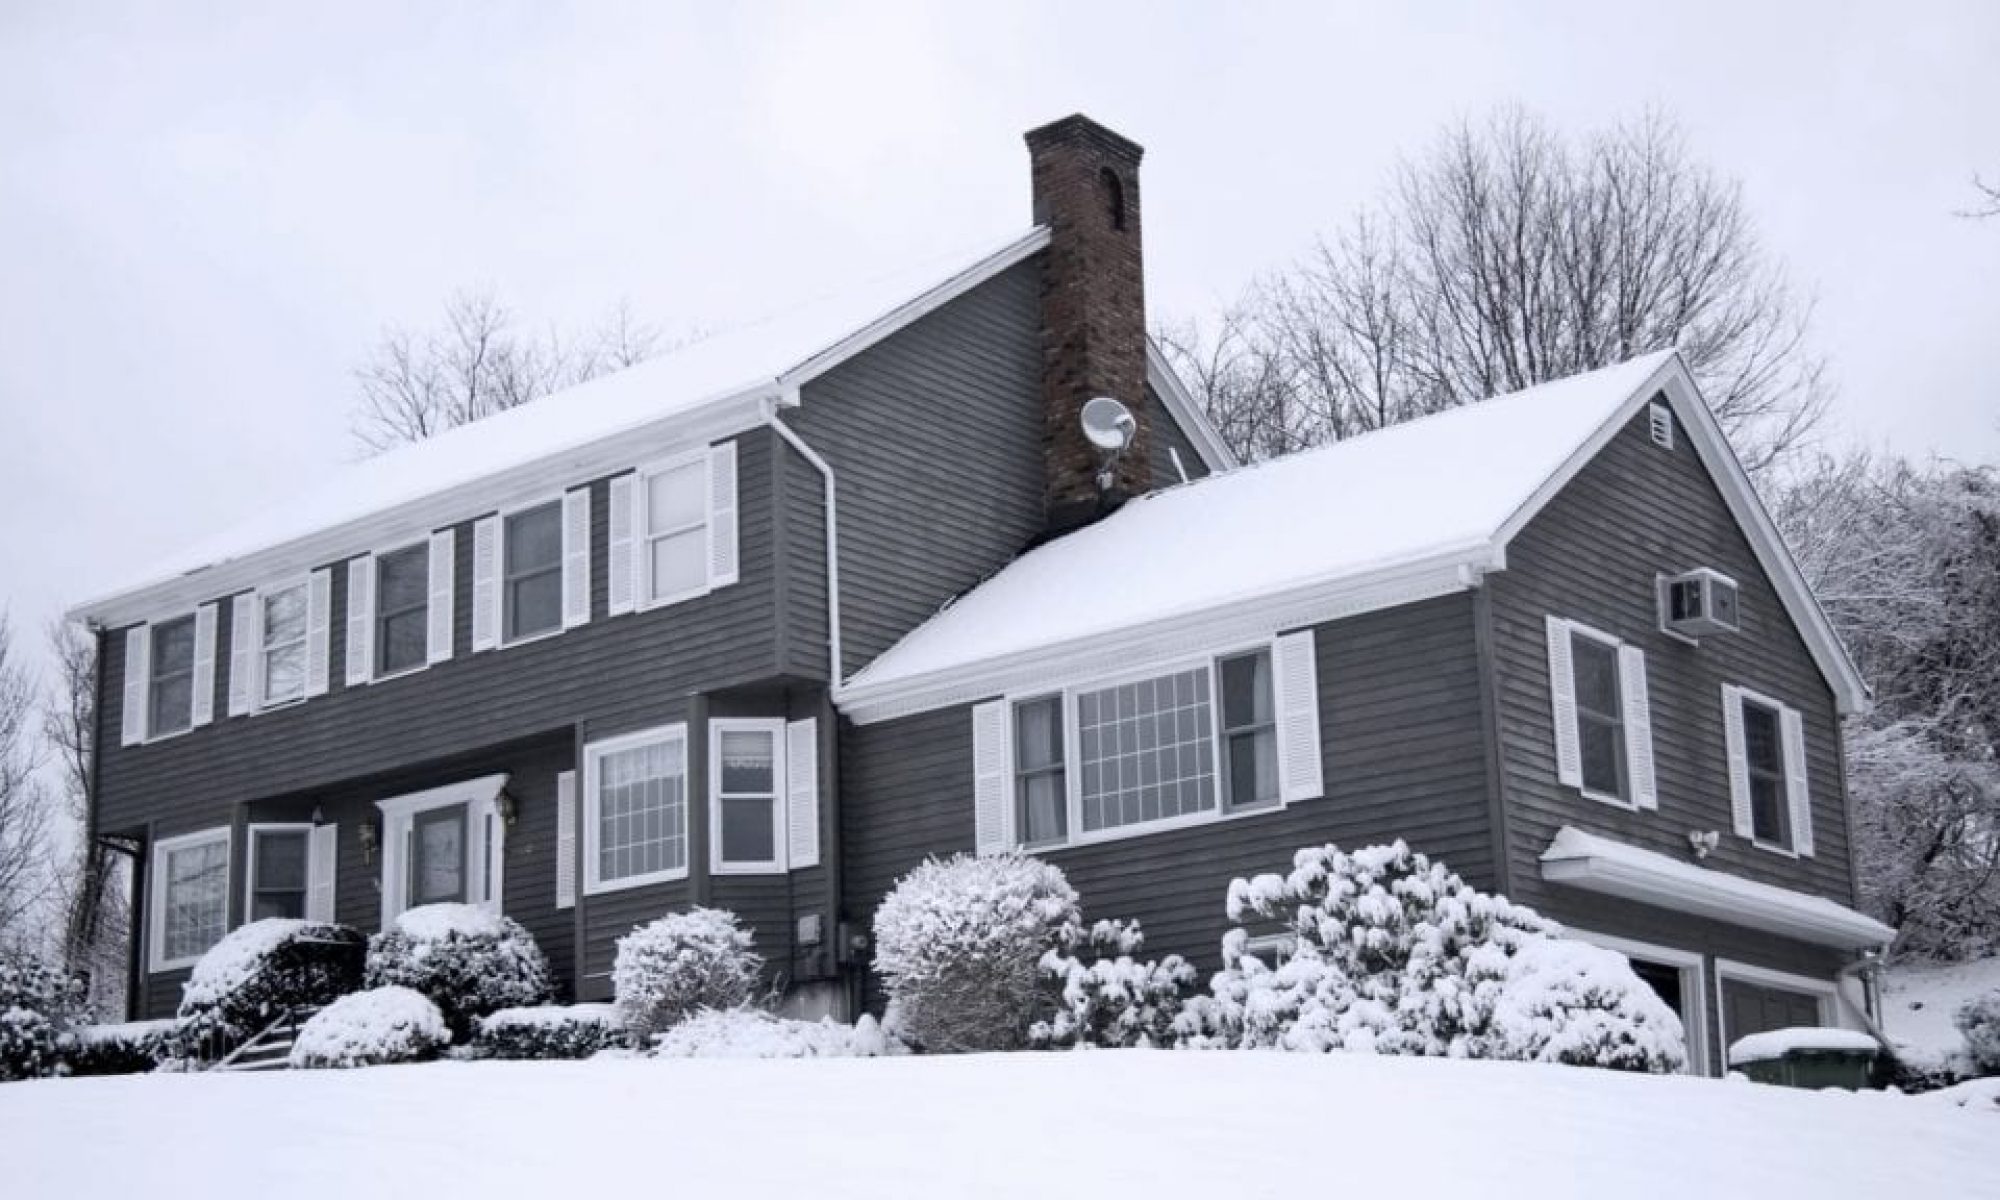 Wintergarten Roofing and Home Contracting